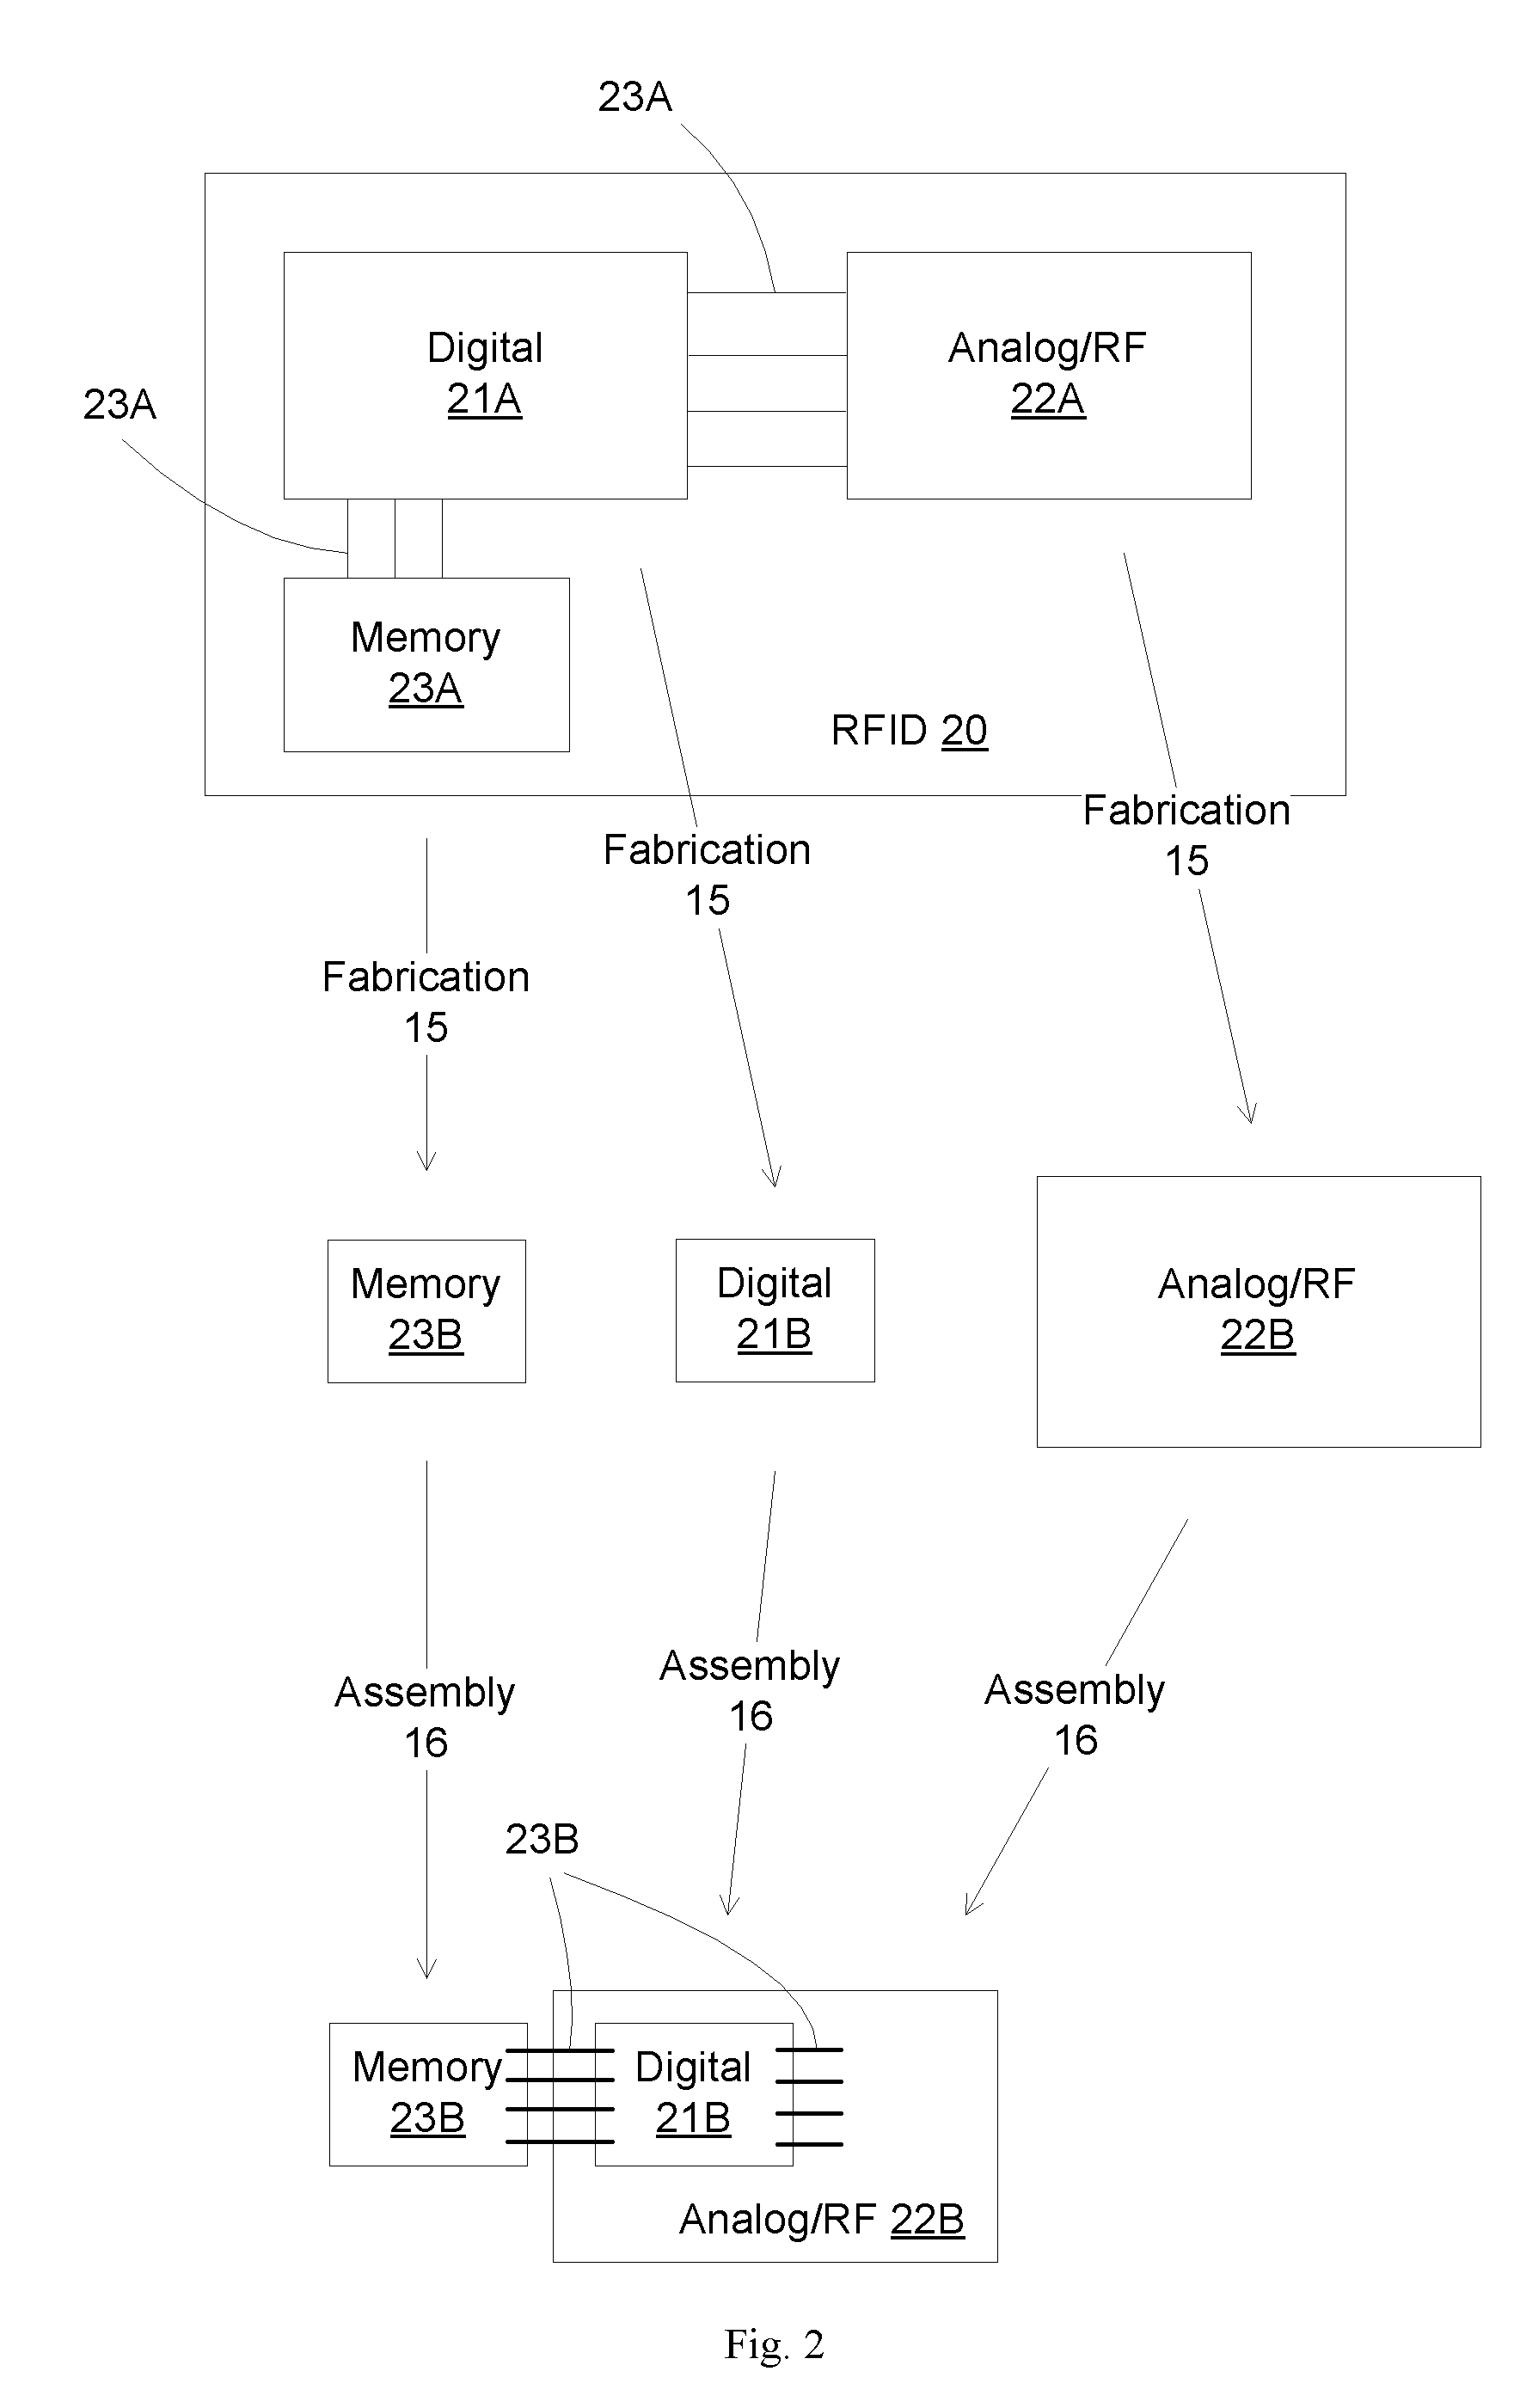 Methods for interconnecting bonding pads between components